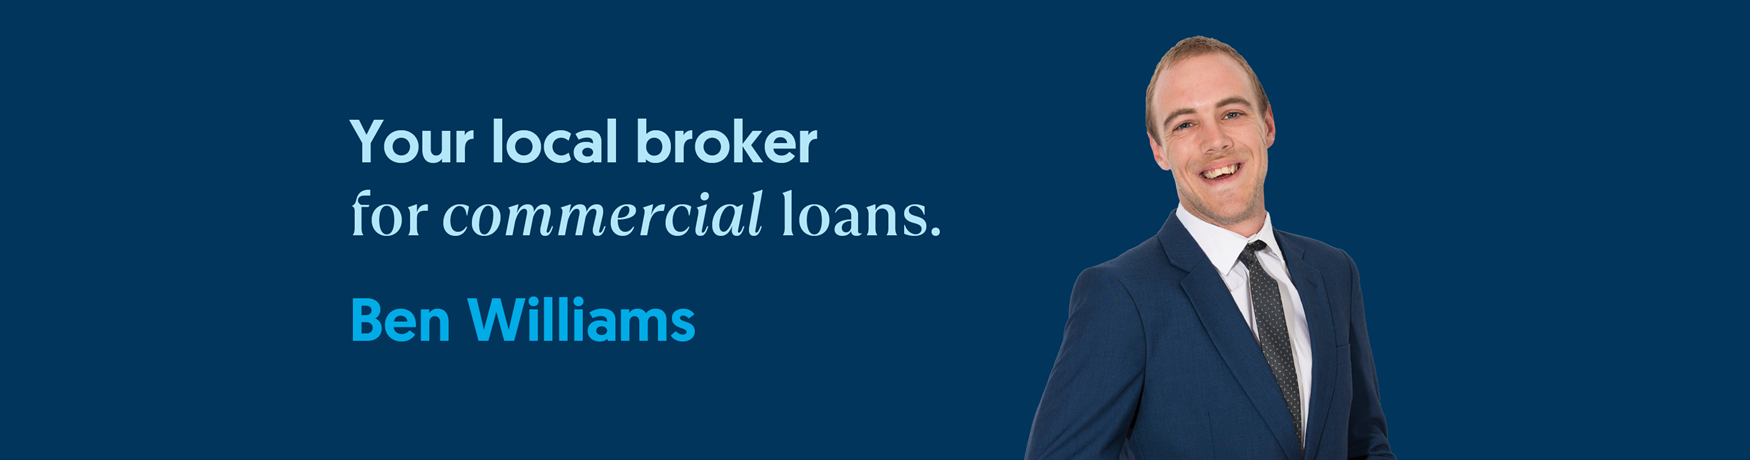 Ben Williams Mortgage Broker Commercial Loans